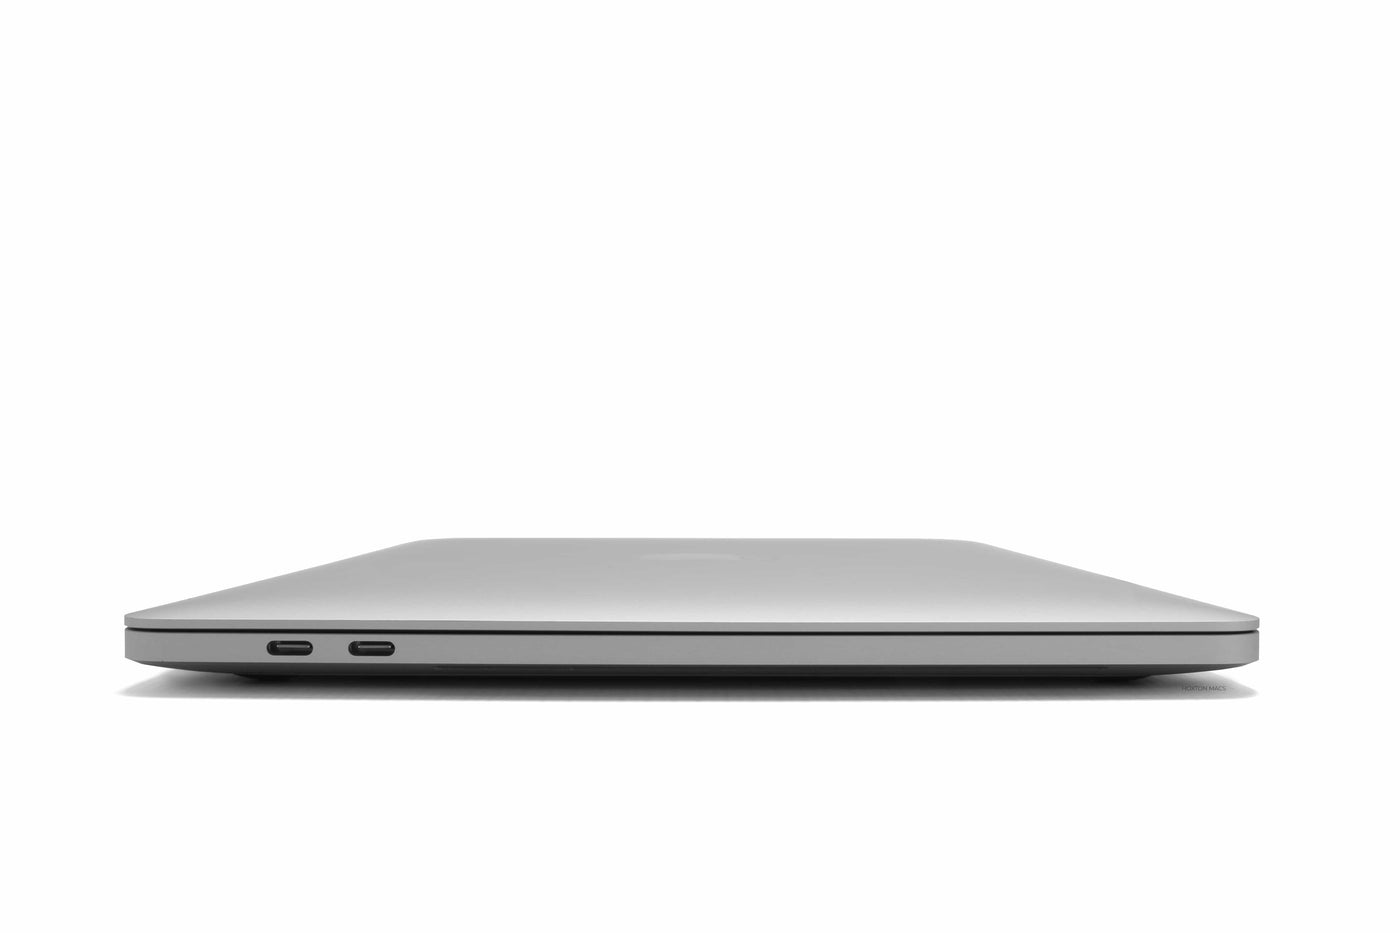 Apple MacBook Pro 13-inch MacBook Pro 13-inch M1 (Silver, 2020) - Excellent